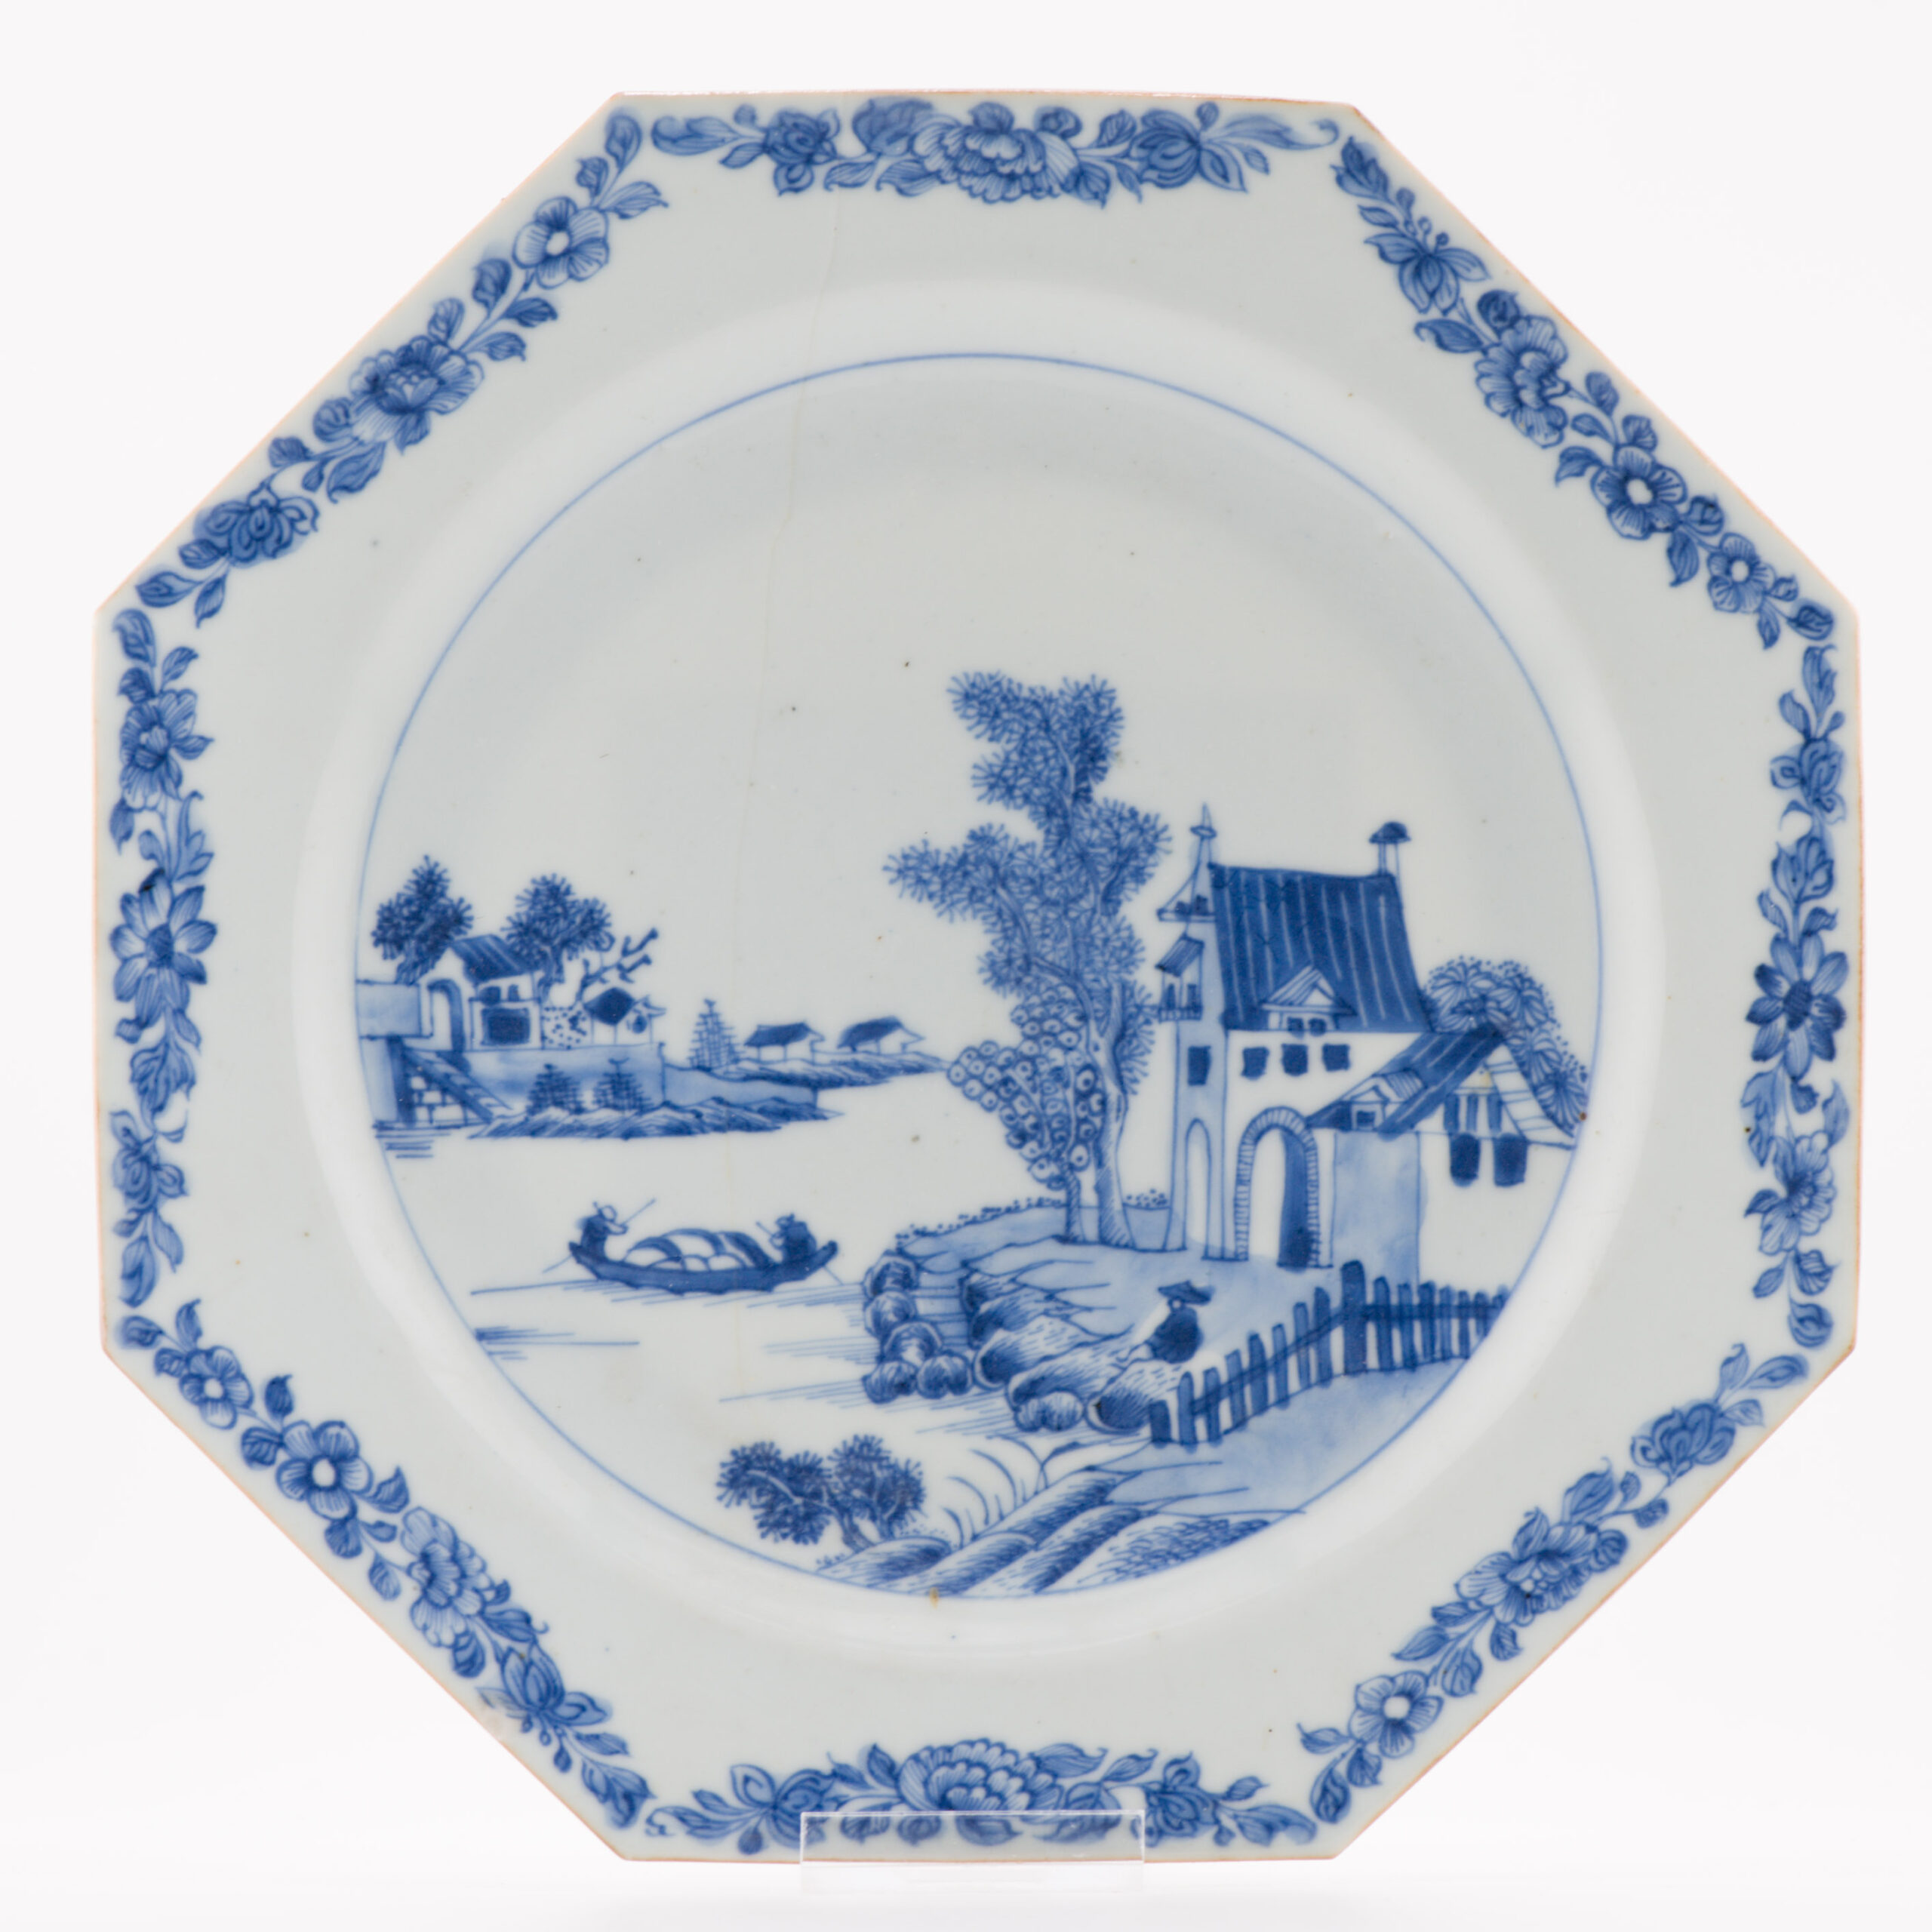 1335 Lovely cobalt blue plate with Dutch Warehouses Chine de Commande 1750